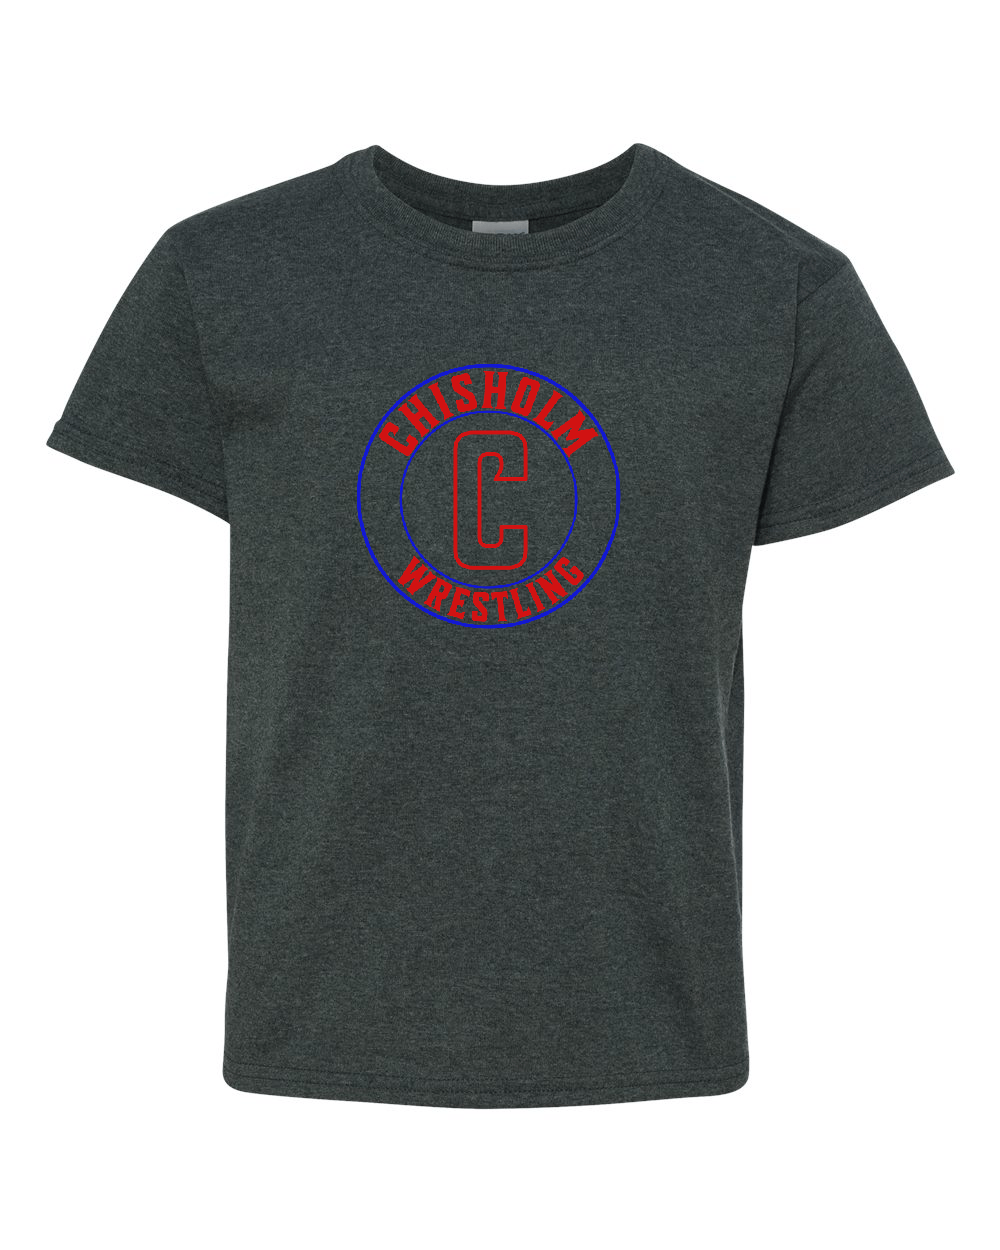 Chisholm Wrestling Club - Standard T shirt with Circle C logo